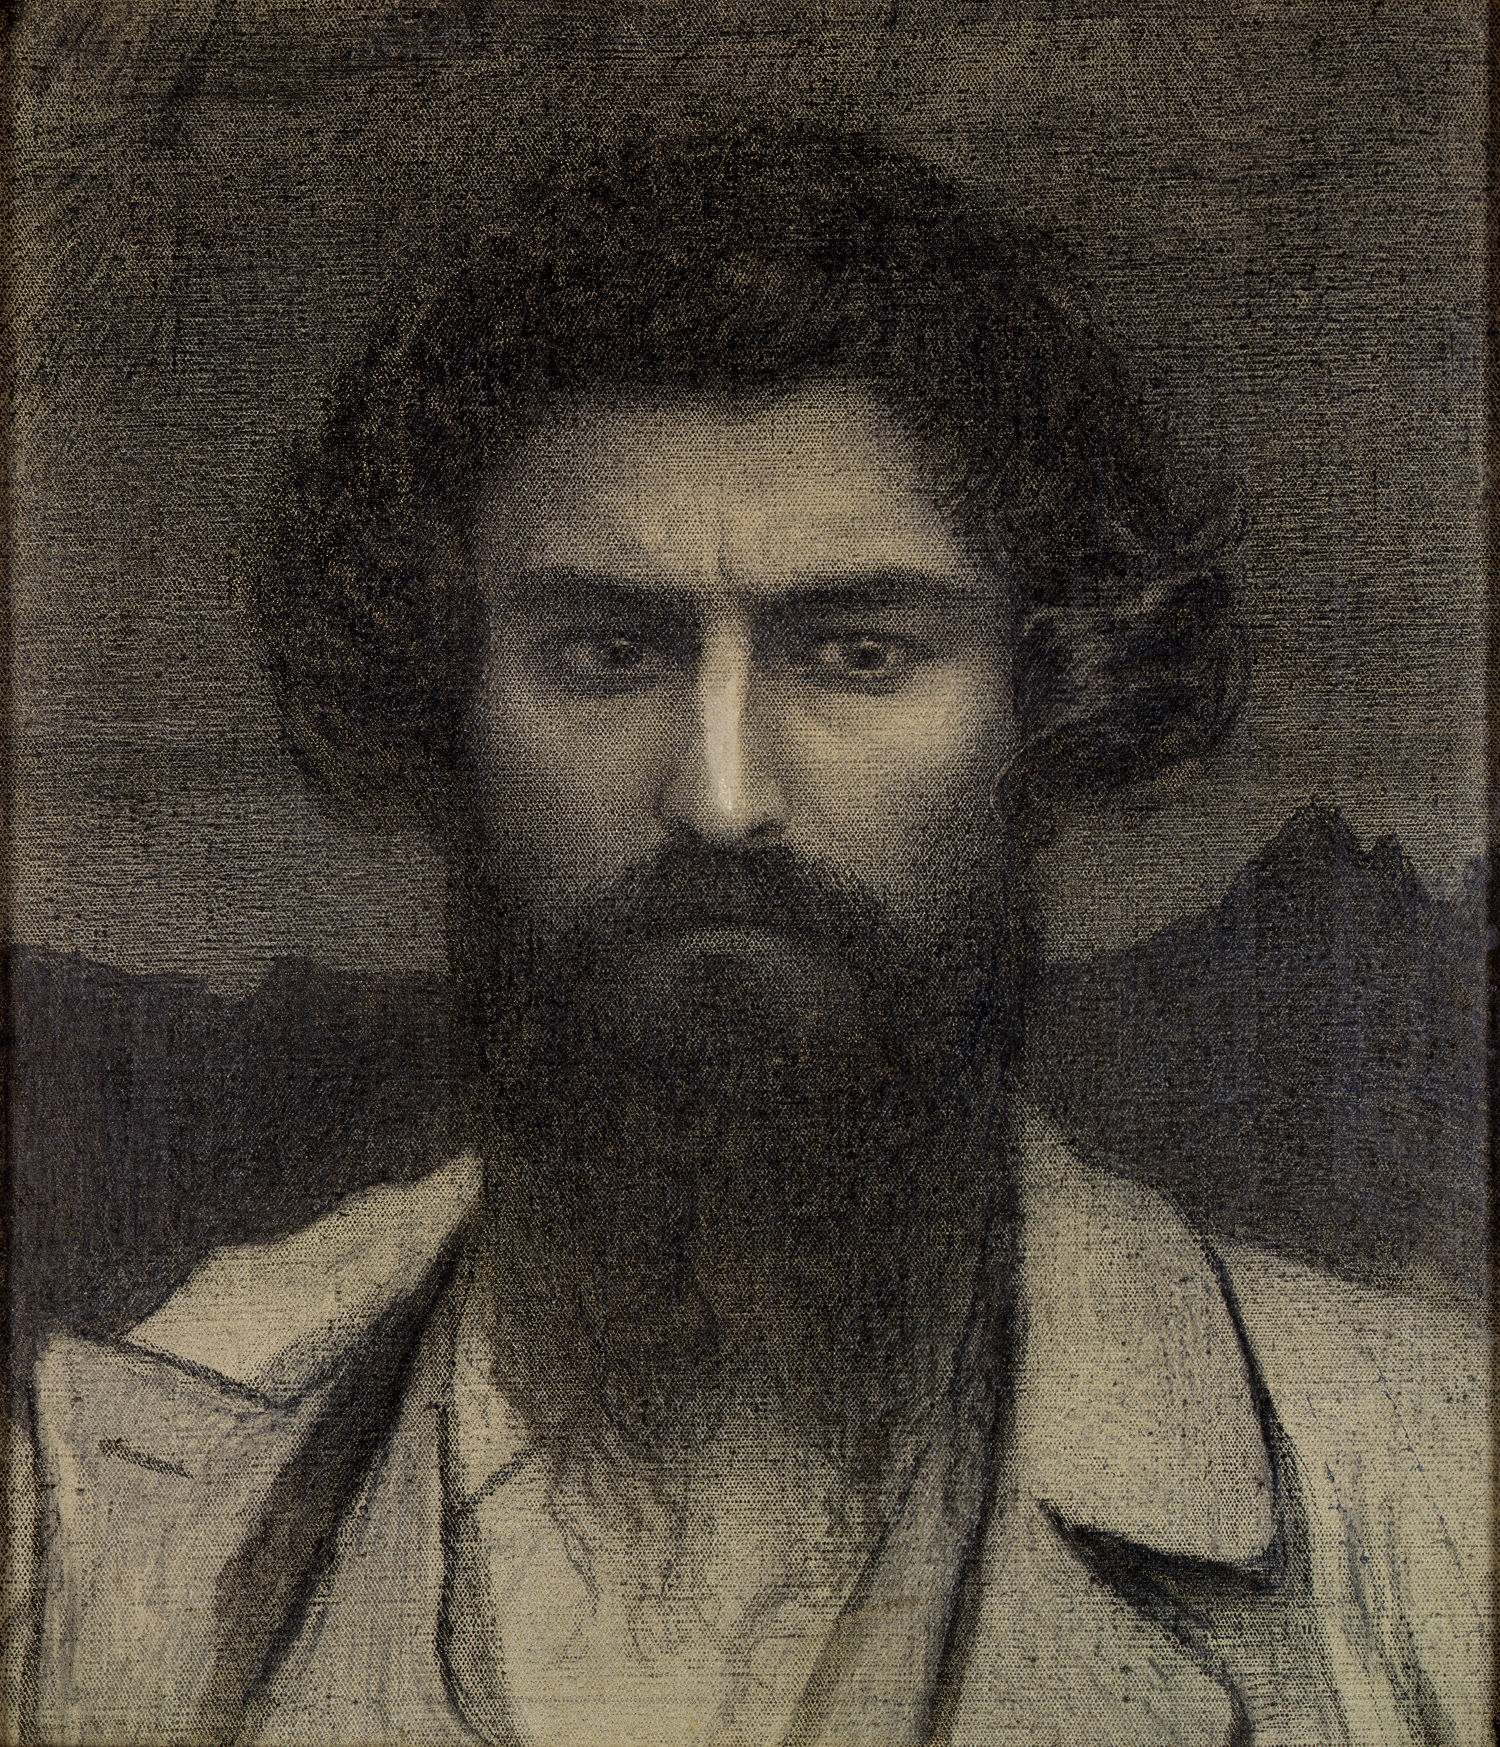 Giovanni Segantini - January 15, 1858 - September 28, 1899